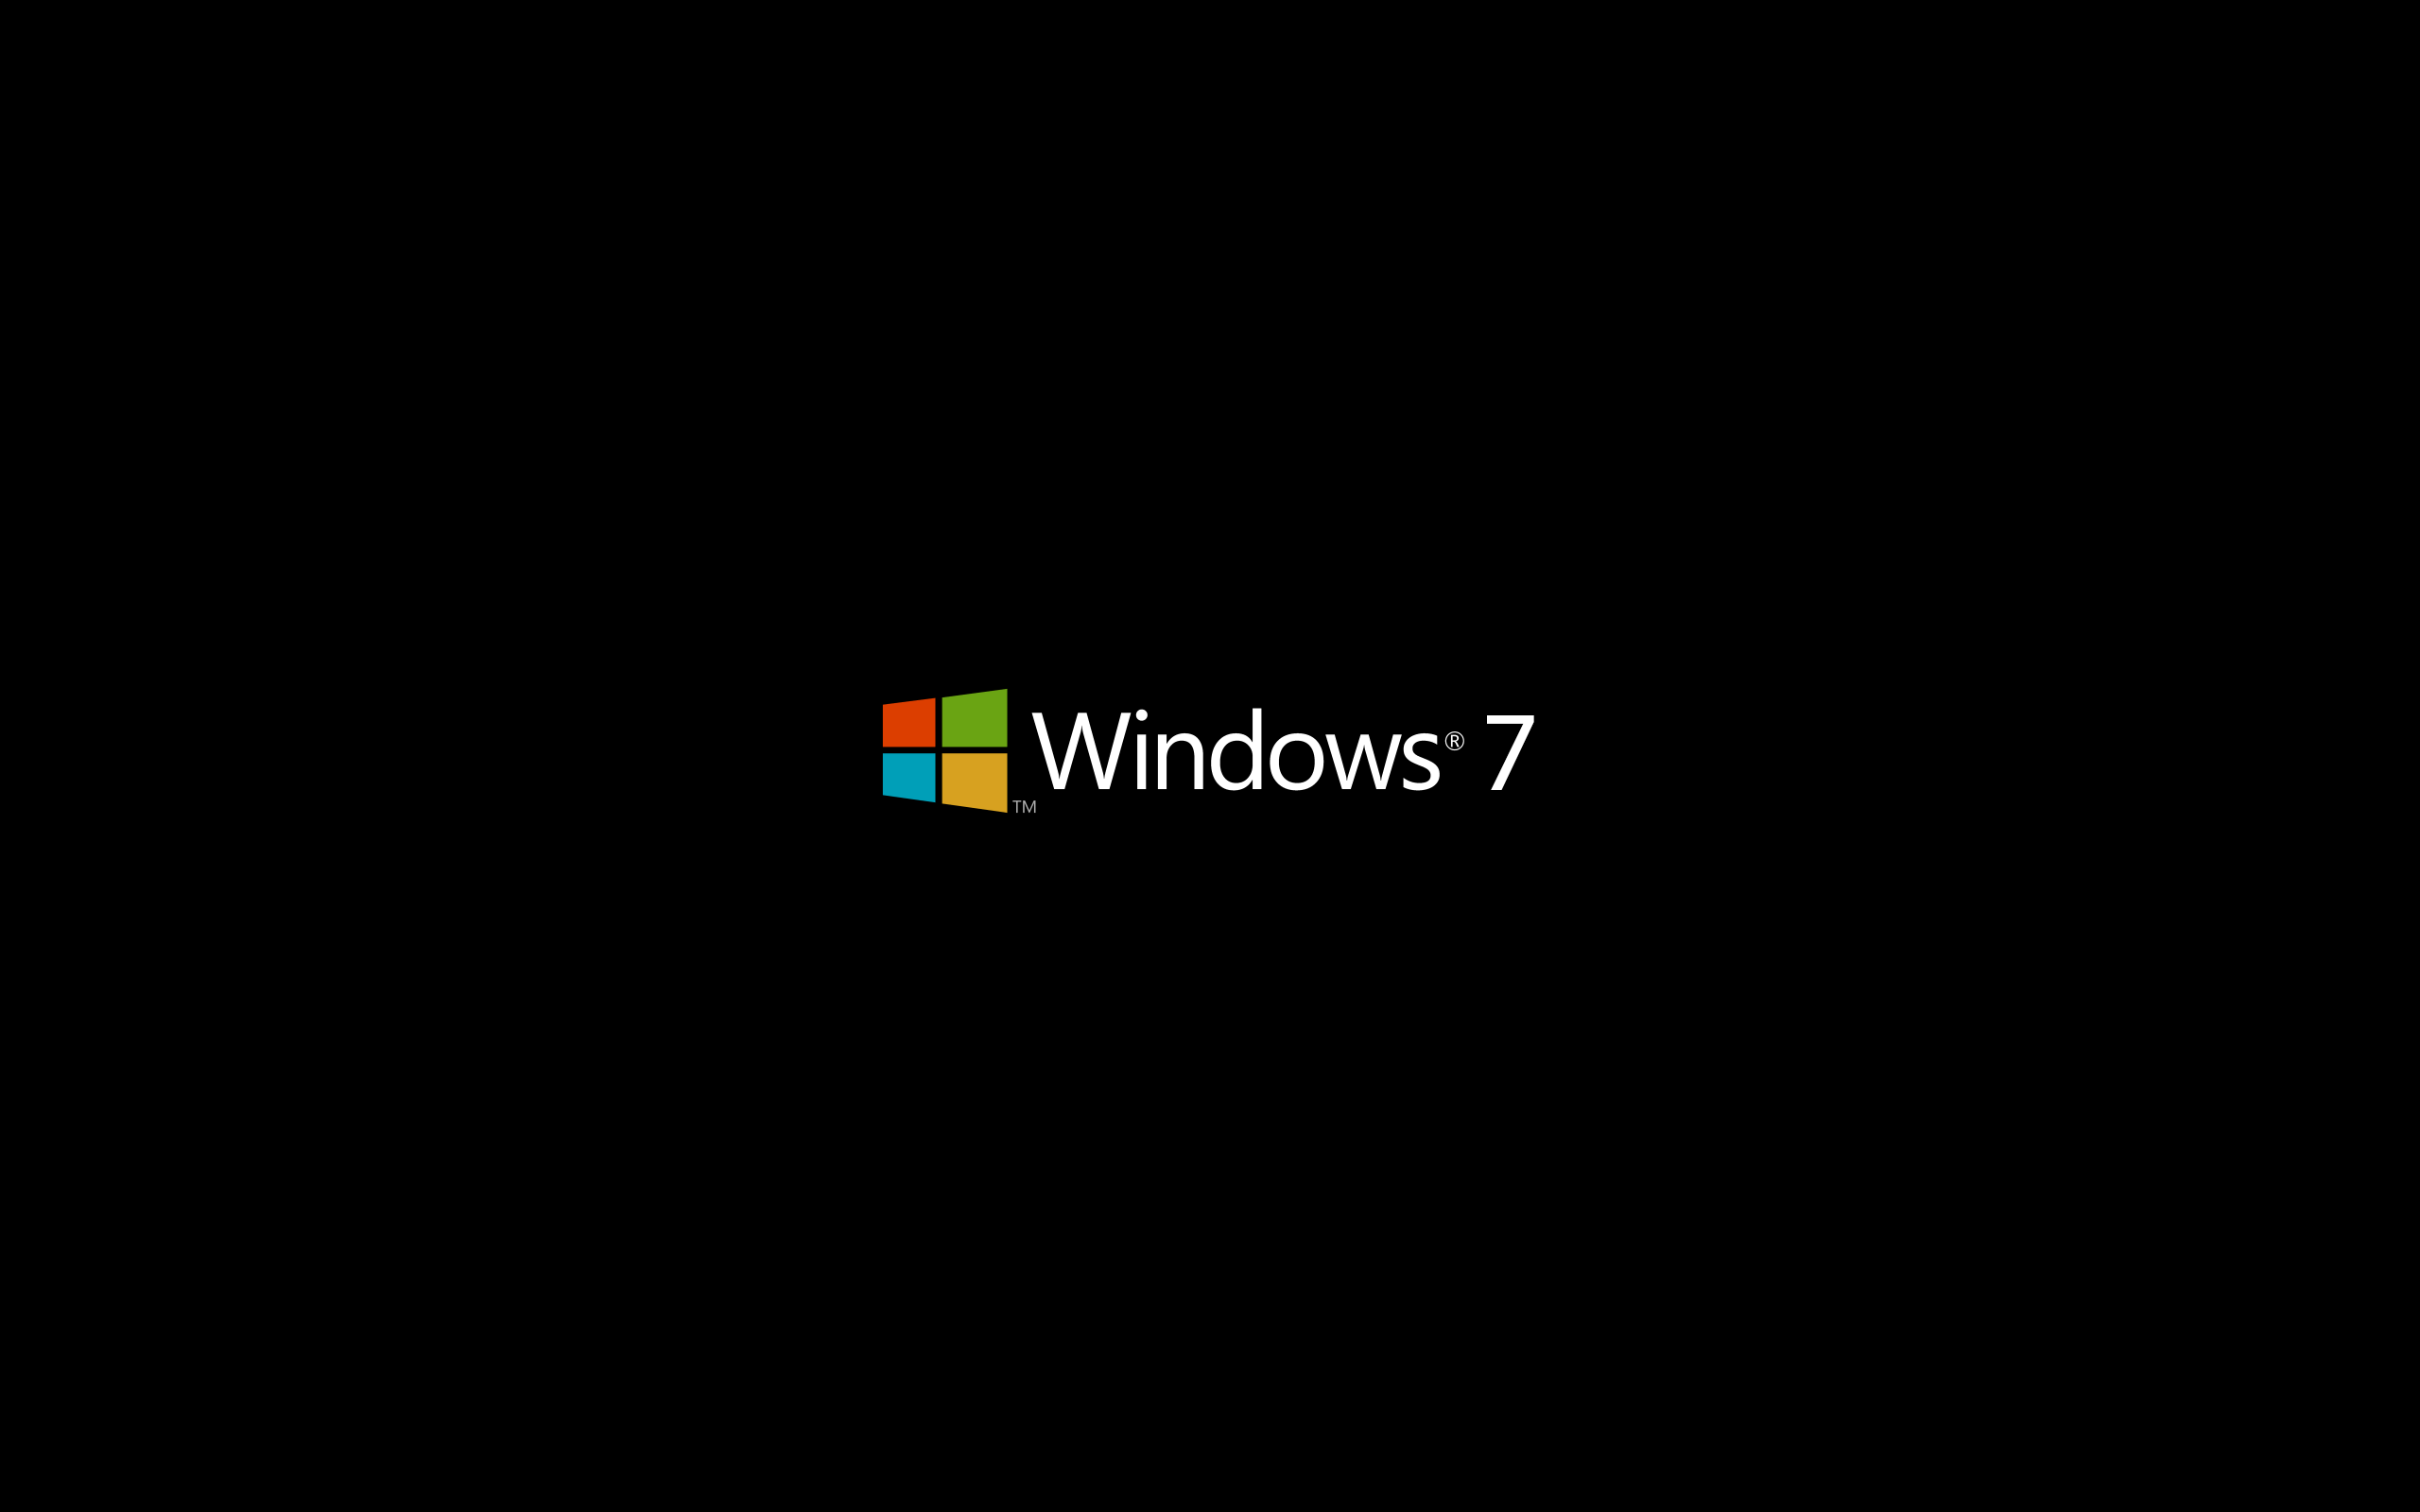 General 2560x1600 Windows 7 Microsoft Windows operating system minimalism simple background logo black background